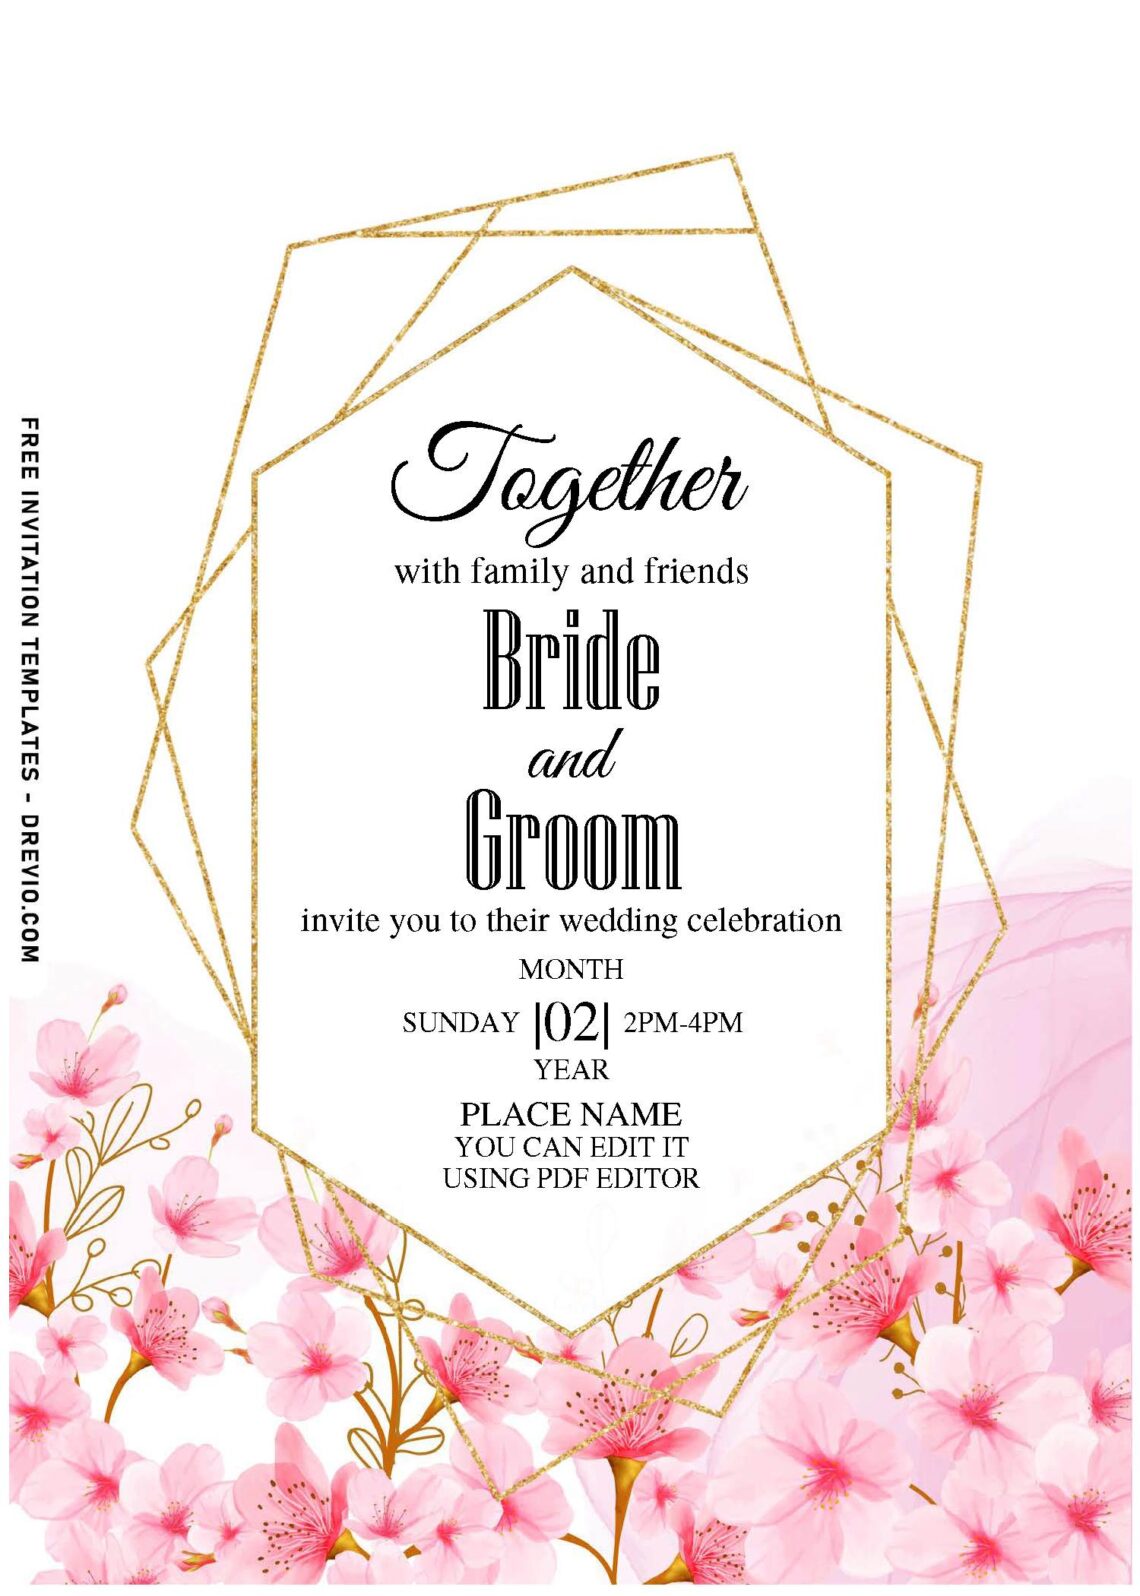 (Free Editable PDF) Unique Floral And Geometric Wedding Invitation Templates with elegant script